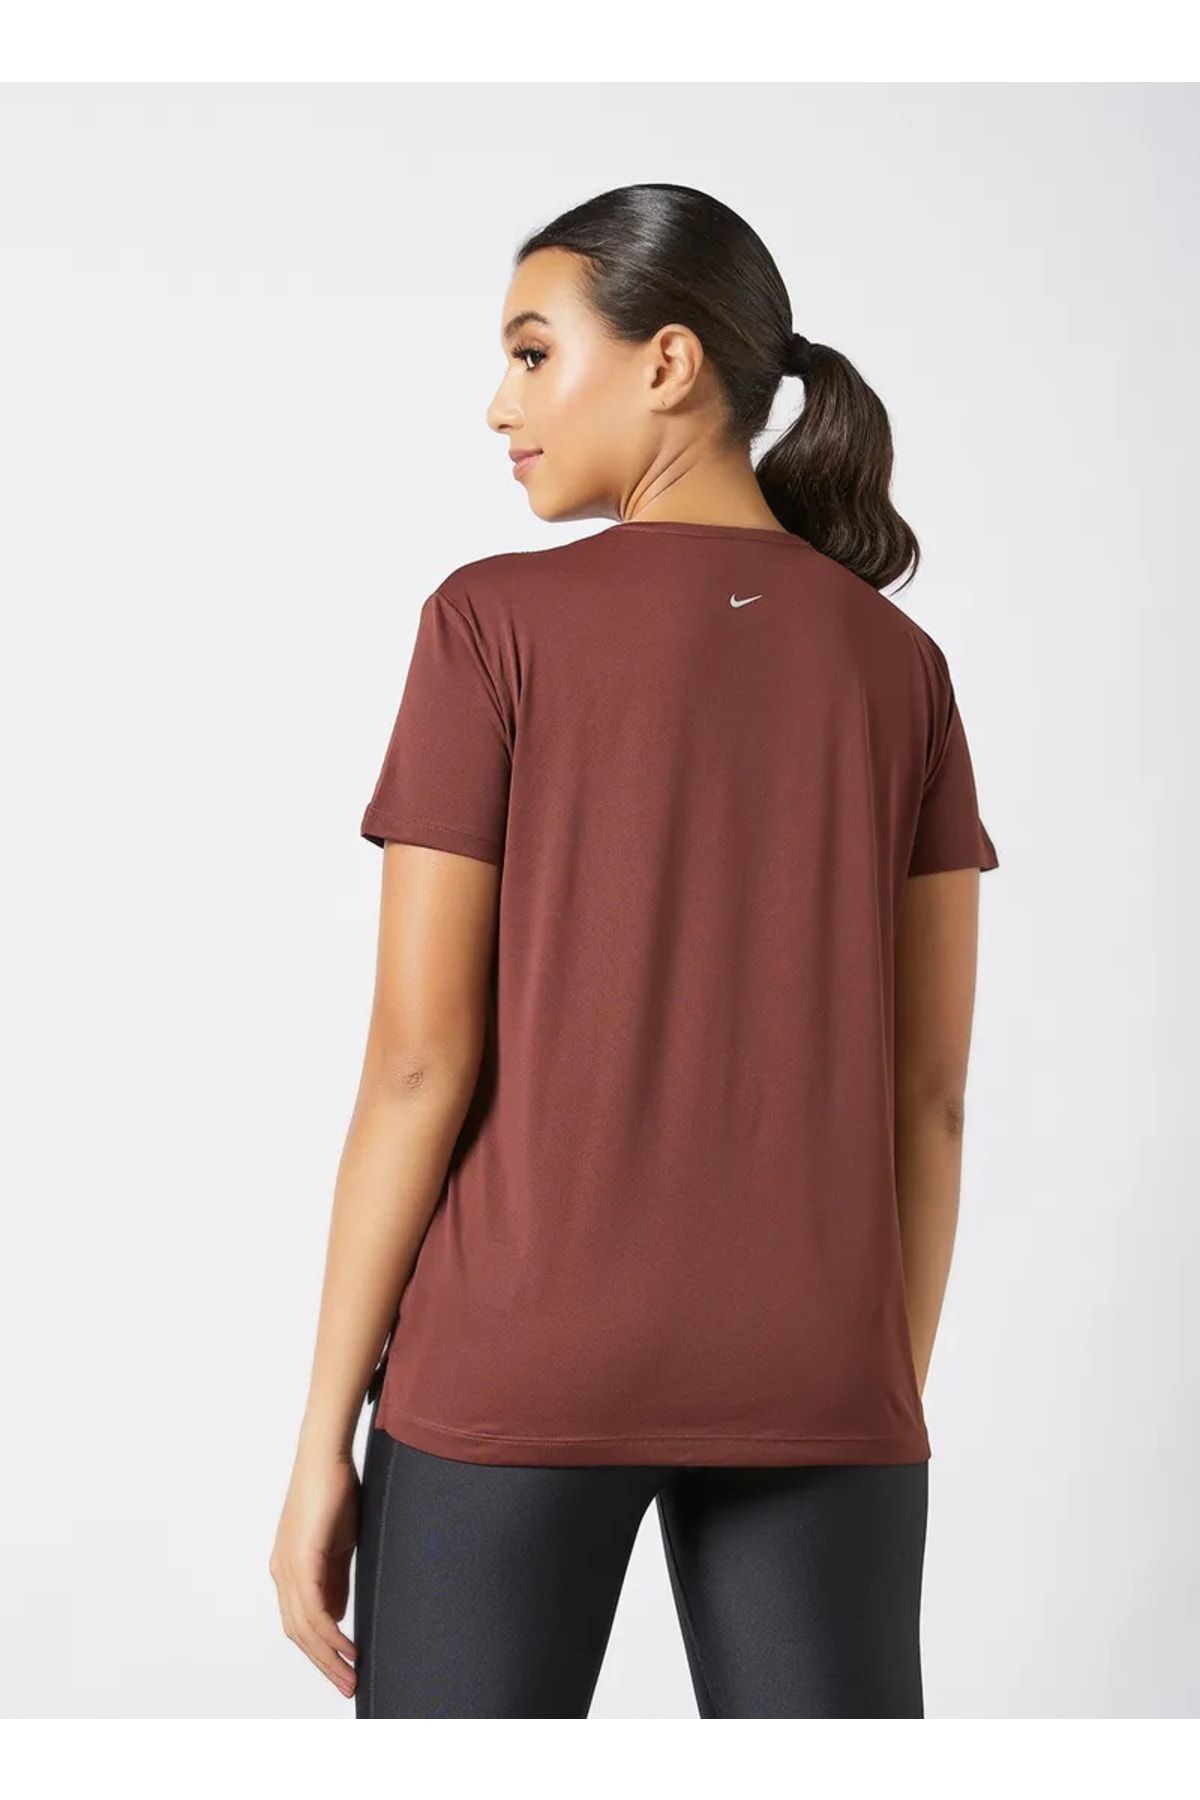 Nike Air Dri-fit Women's T-Shirt - Trendyol